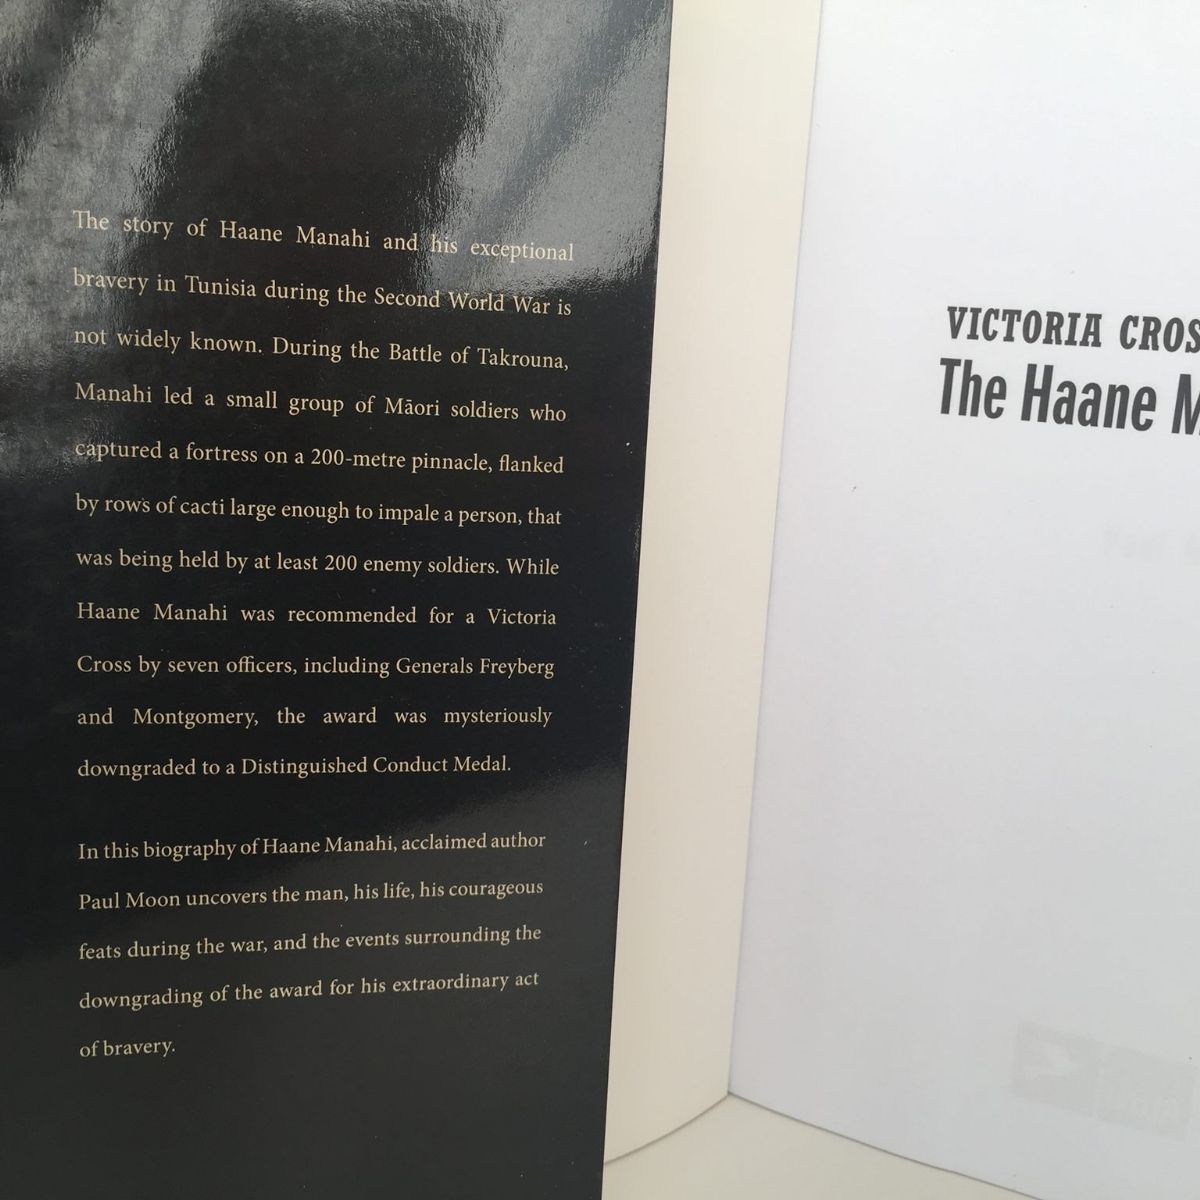 VICTORIA CROSS AT TAKROUNA: The Haane Manahi Story